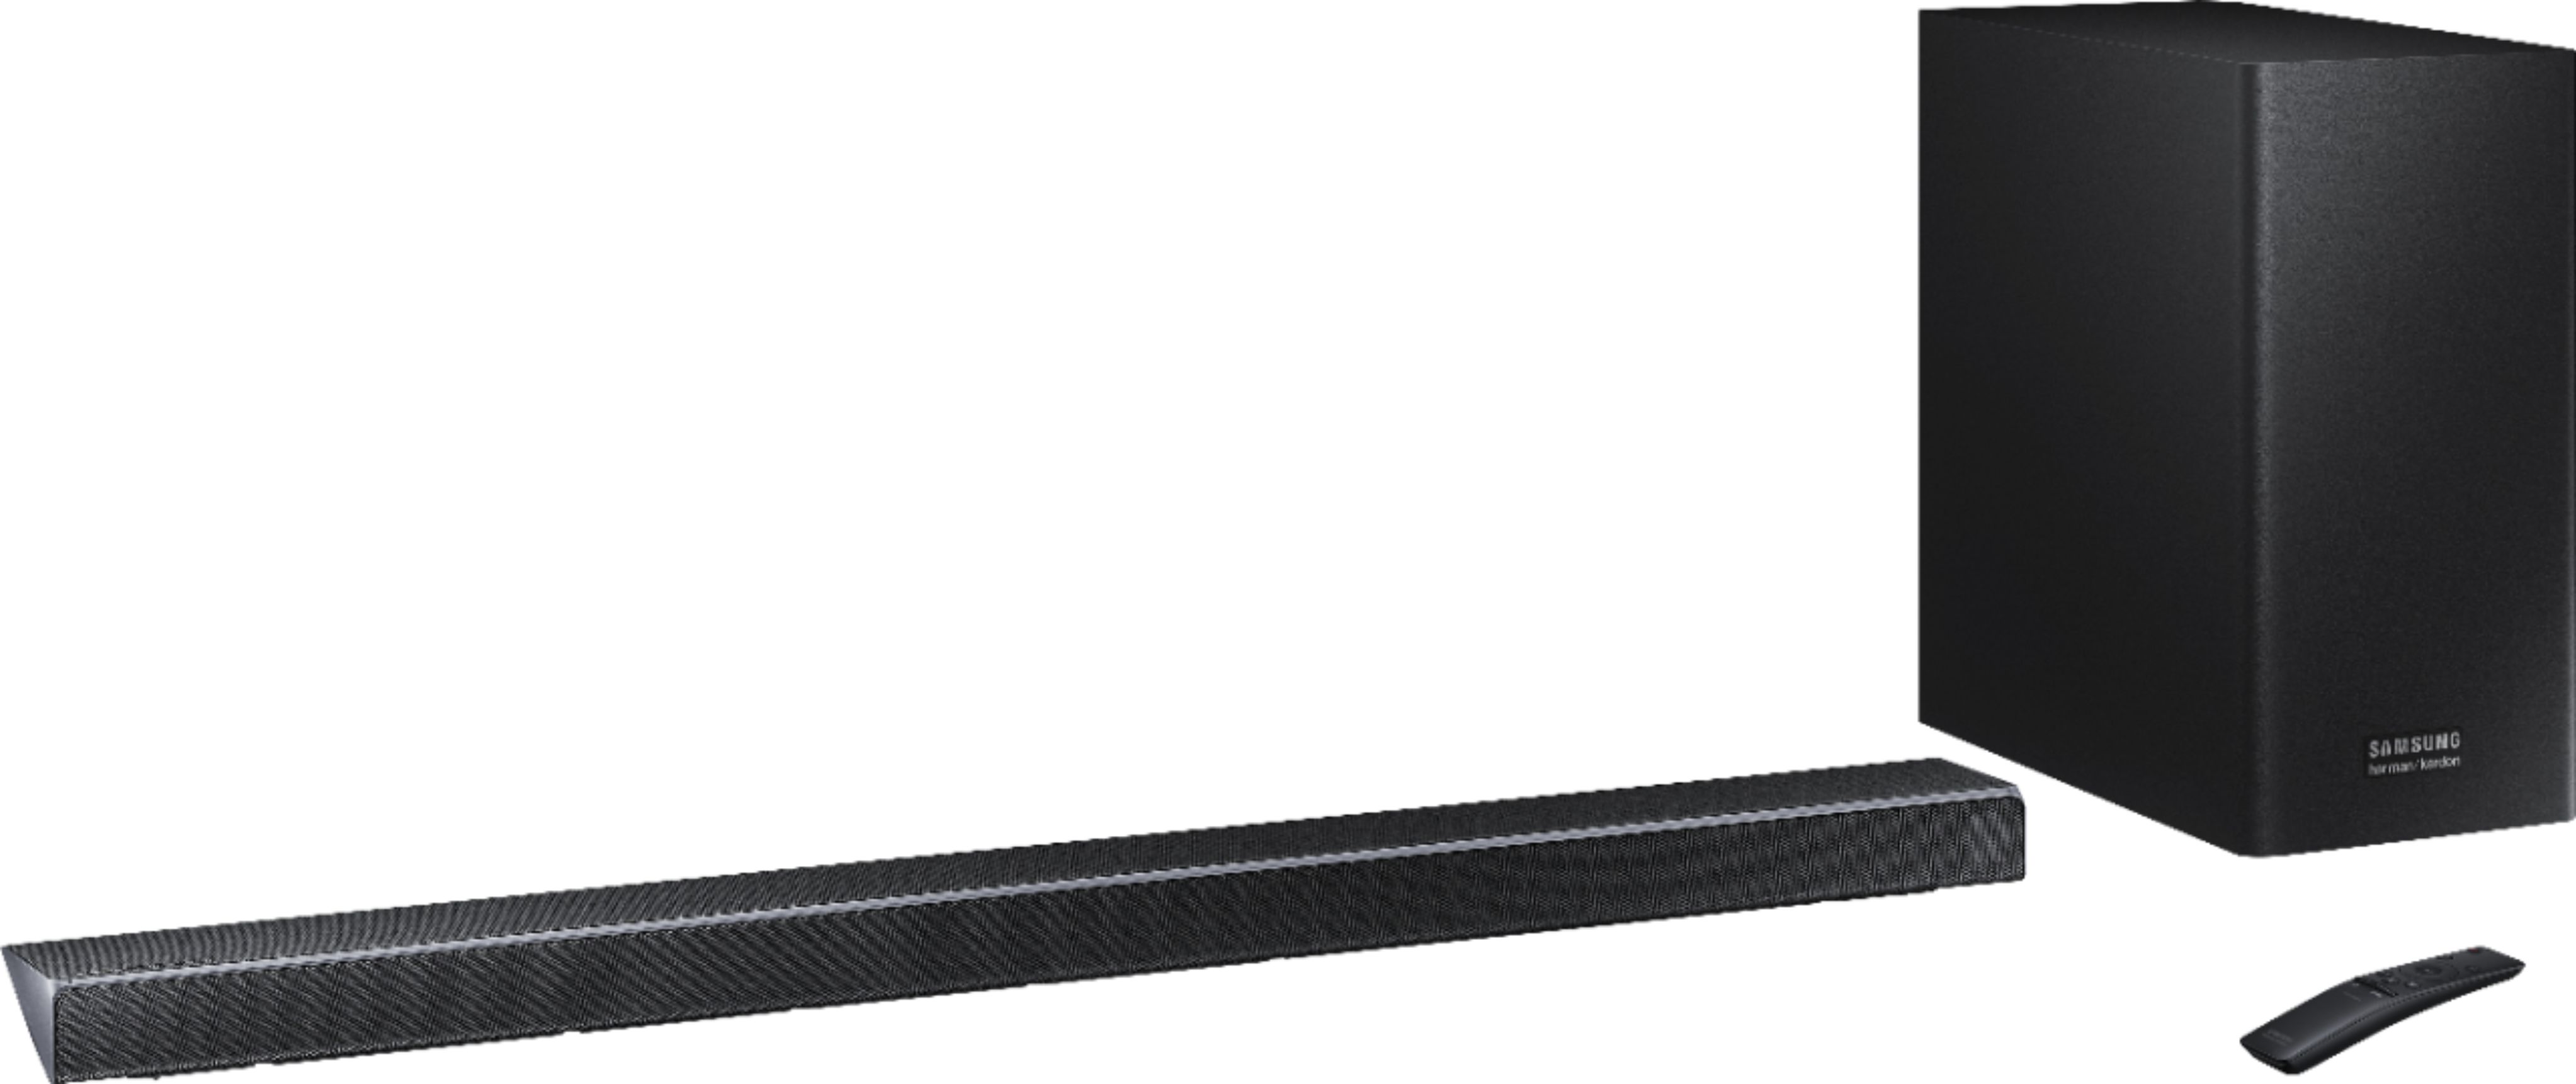 Barra de Sonido Premium Samsung 3.1.2 Ch HW-Q700C — Nstore